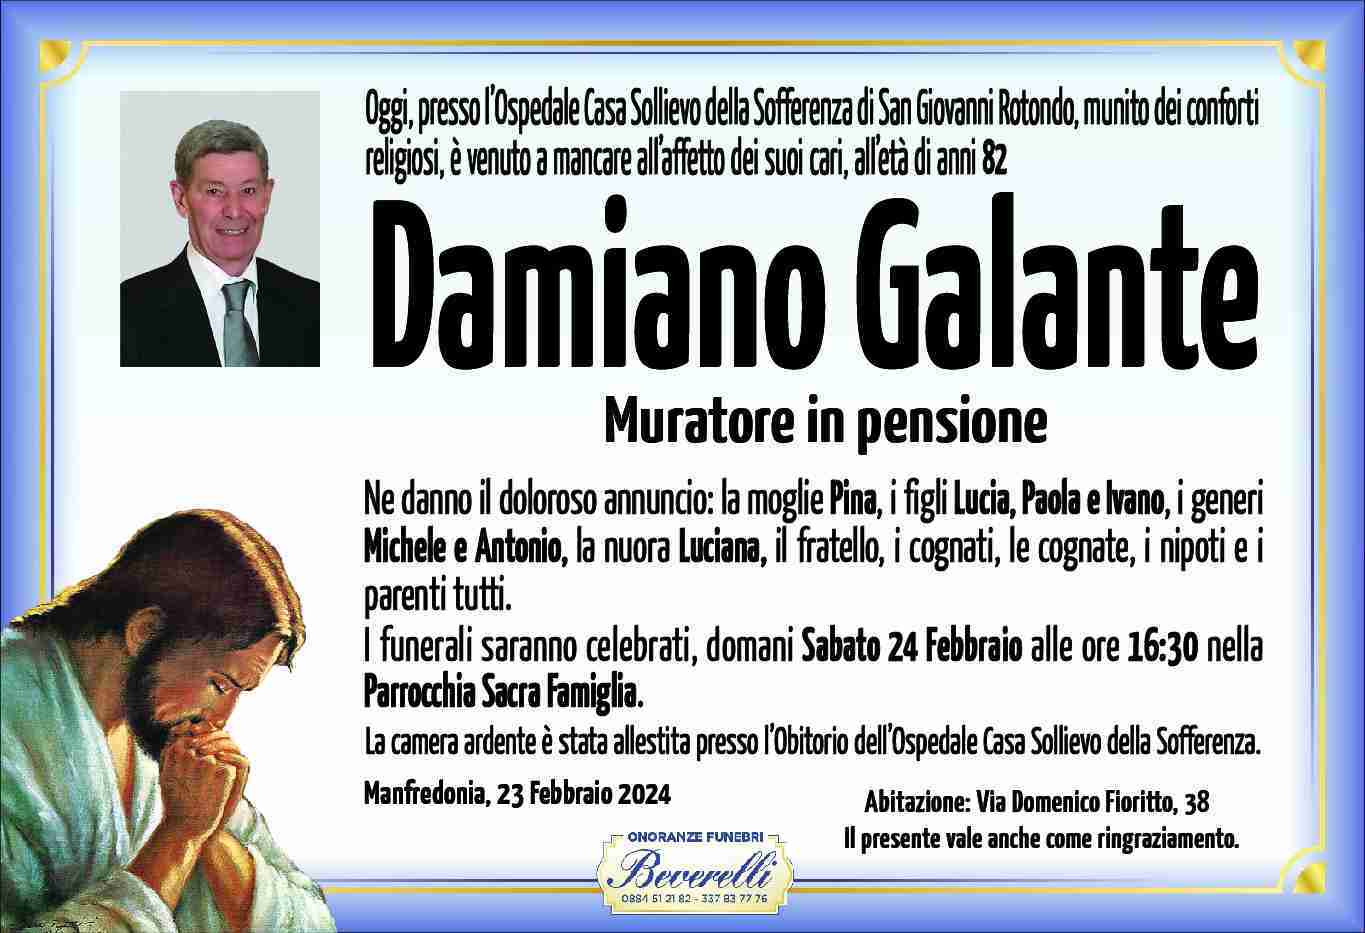 Damiano Galante